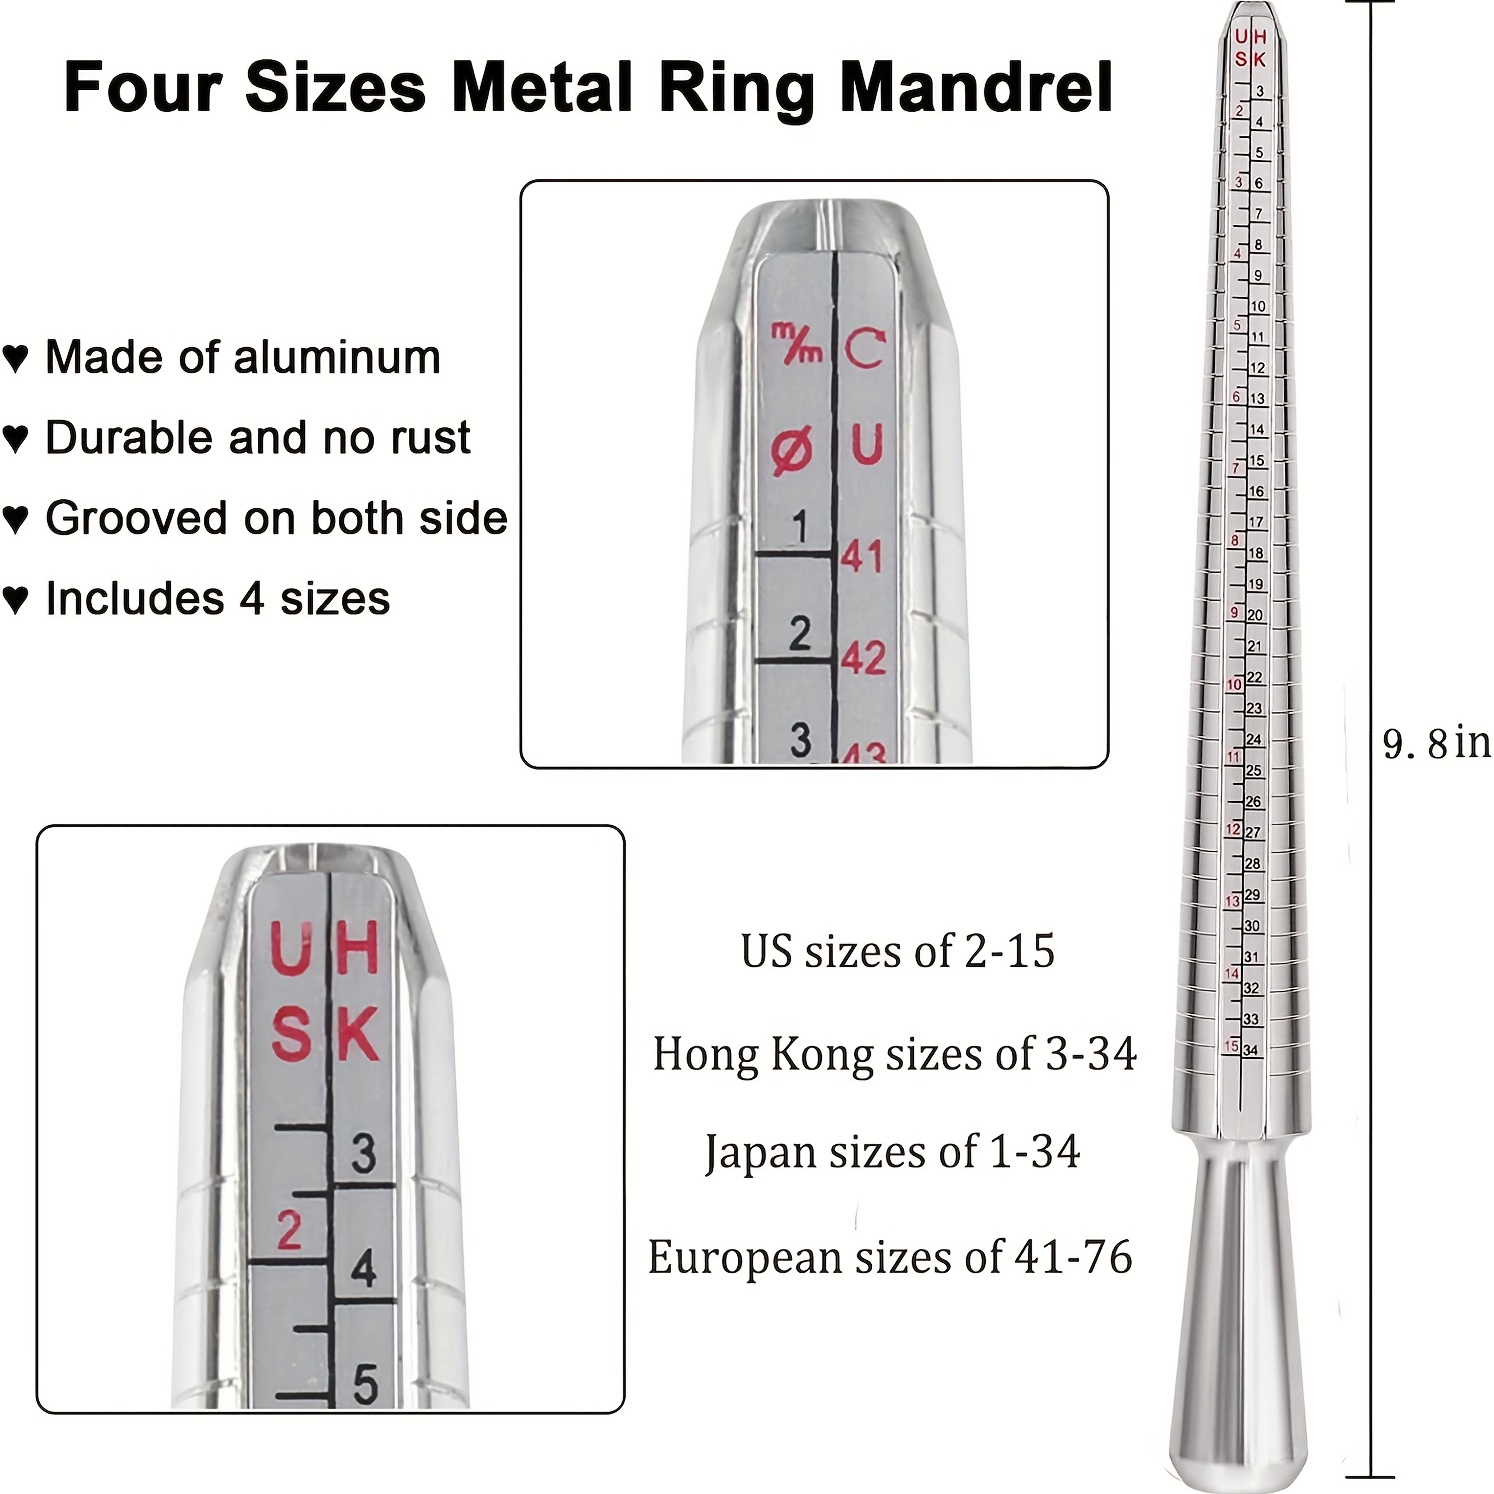 Ring Size Stick Mandrel Finger Gauge Ring Sizer Set Measuring Sizes Jewelry  Tool